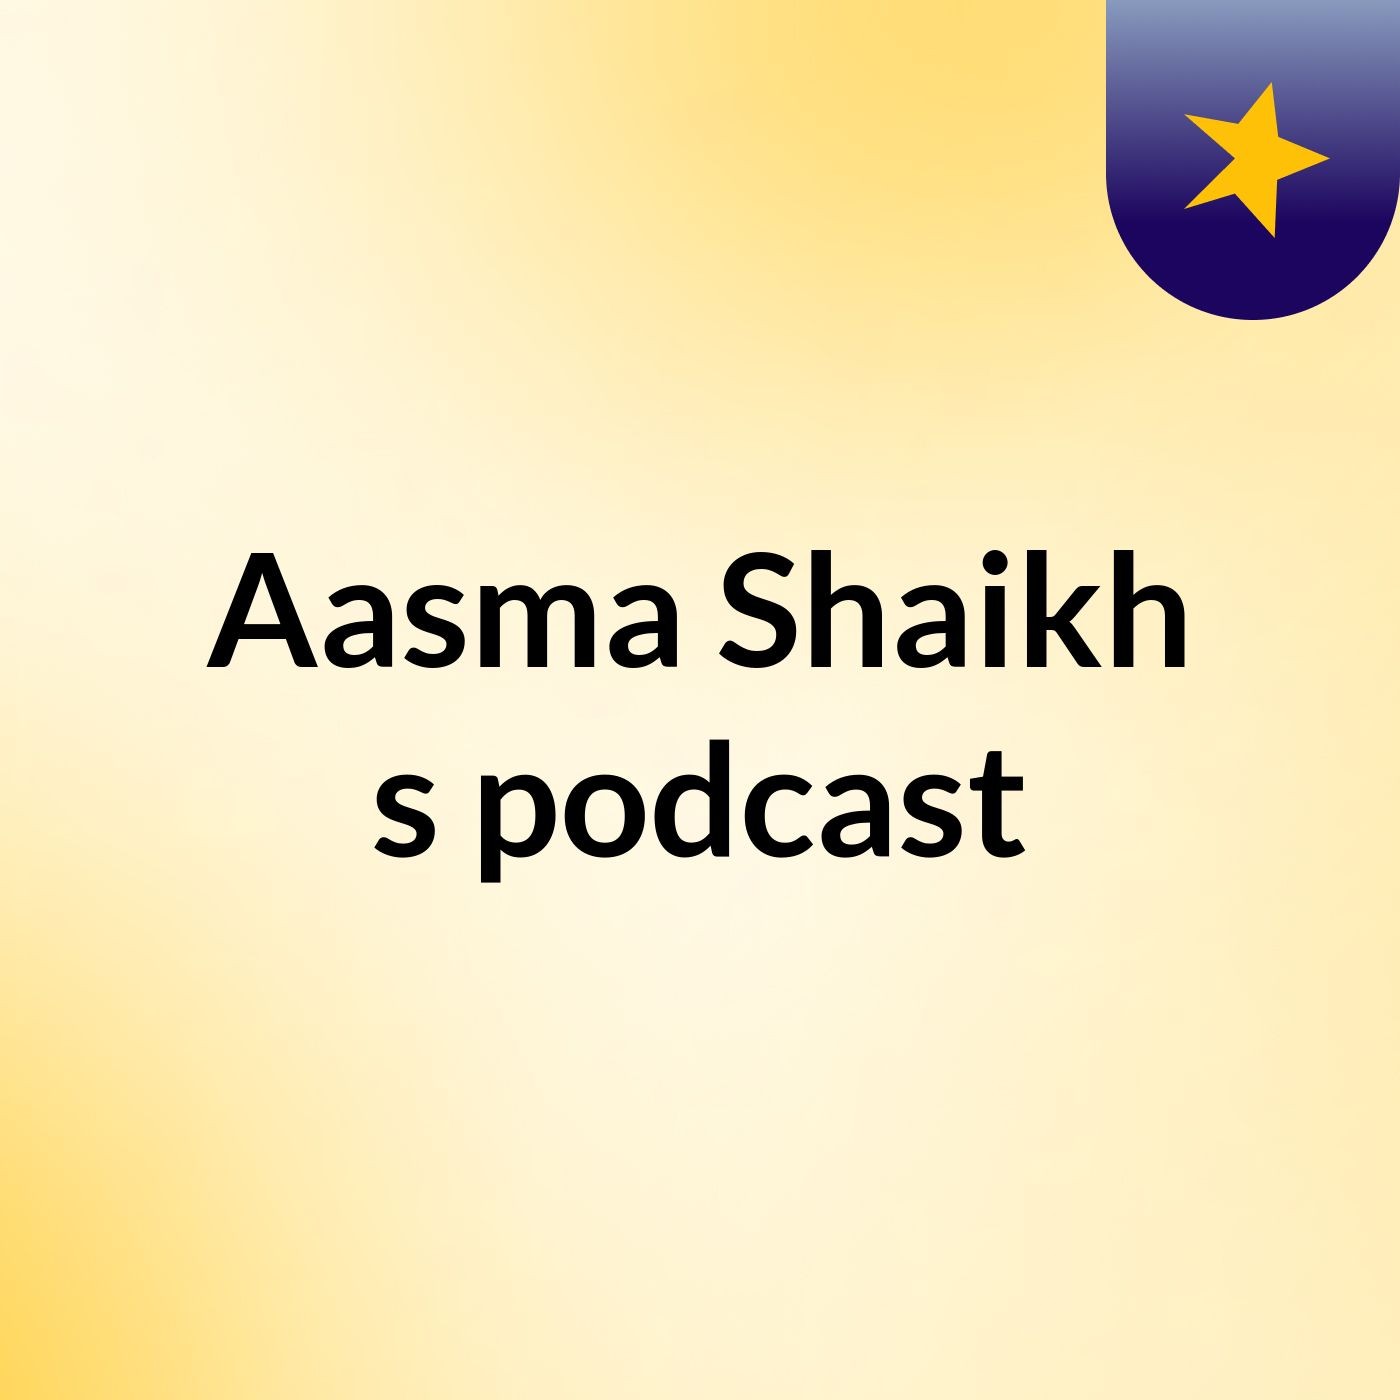 Aasma Shaikh's podcast